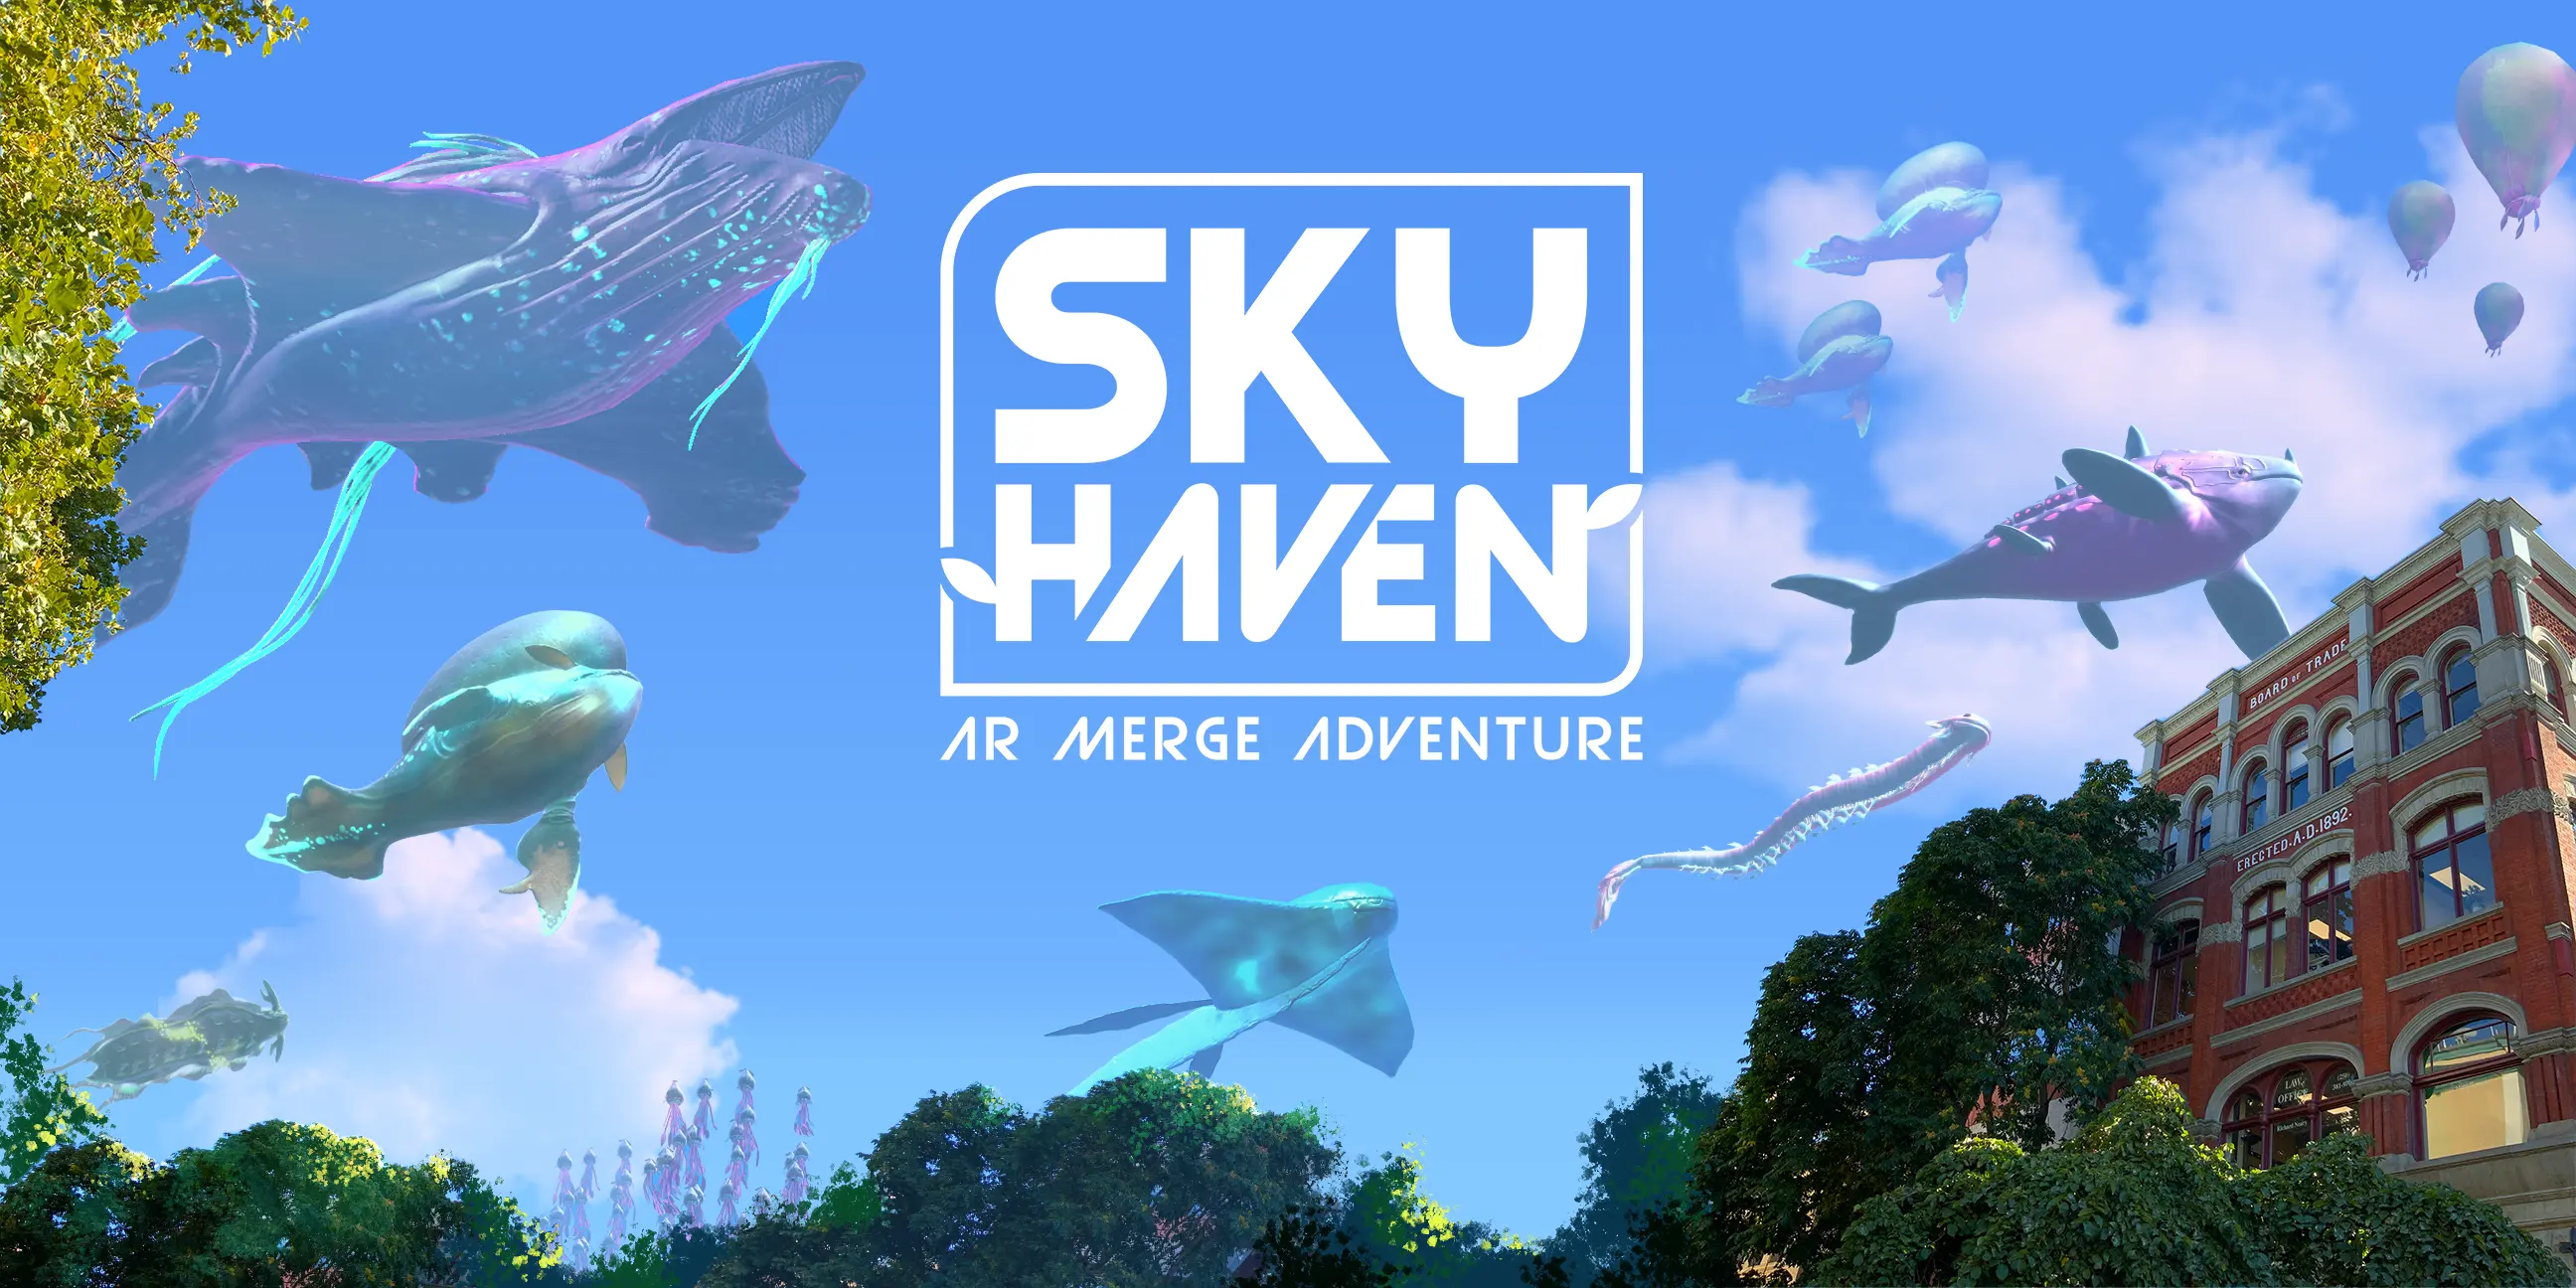 Sky Haven AR Merge Adventure